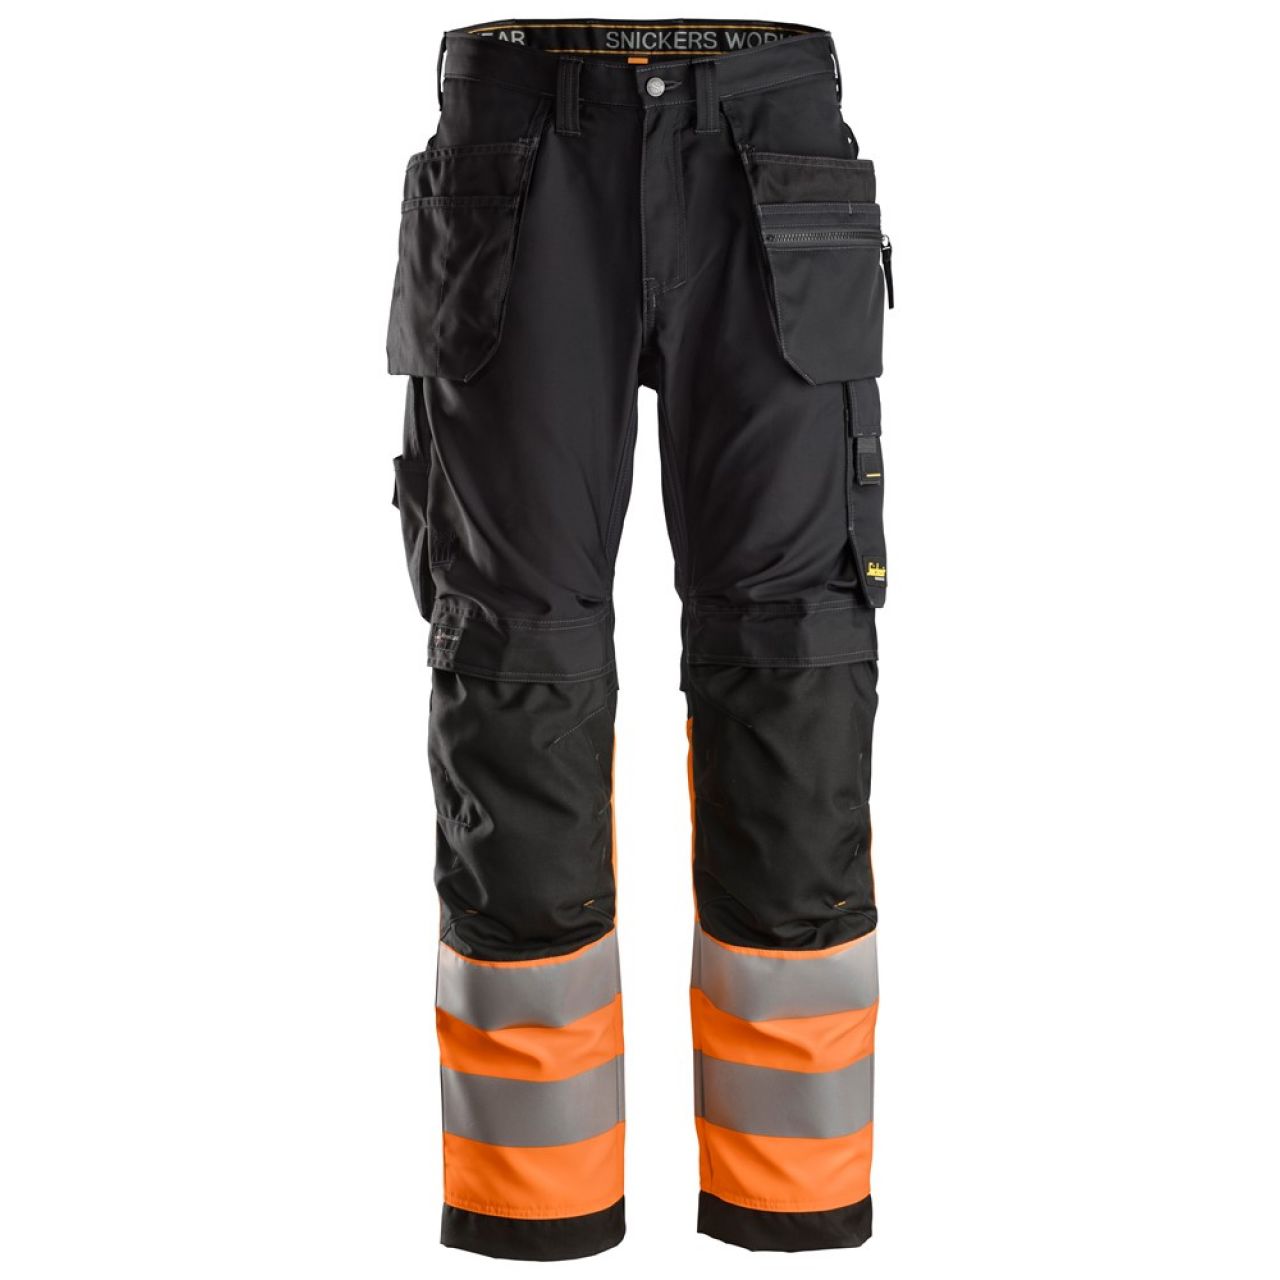 6233 Pantalones largos de trabajo de alta visibilidad clase 1 con bolsillos flotantes AllroundWork negro-naranja talla 88